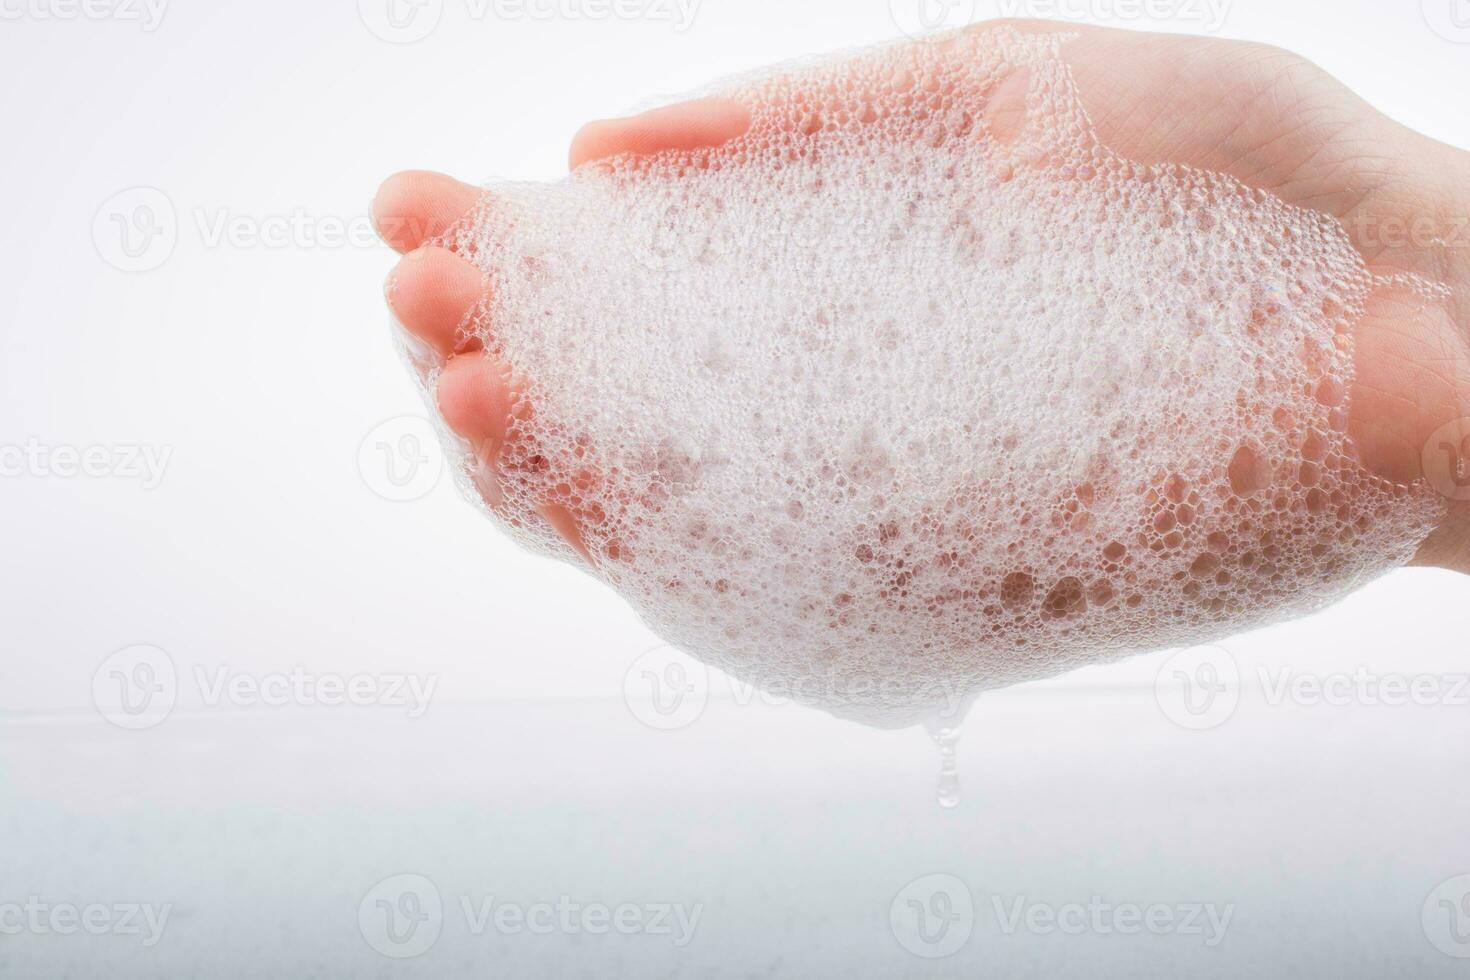 Child washing hands  in foam photo